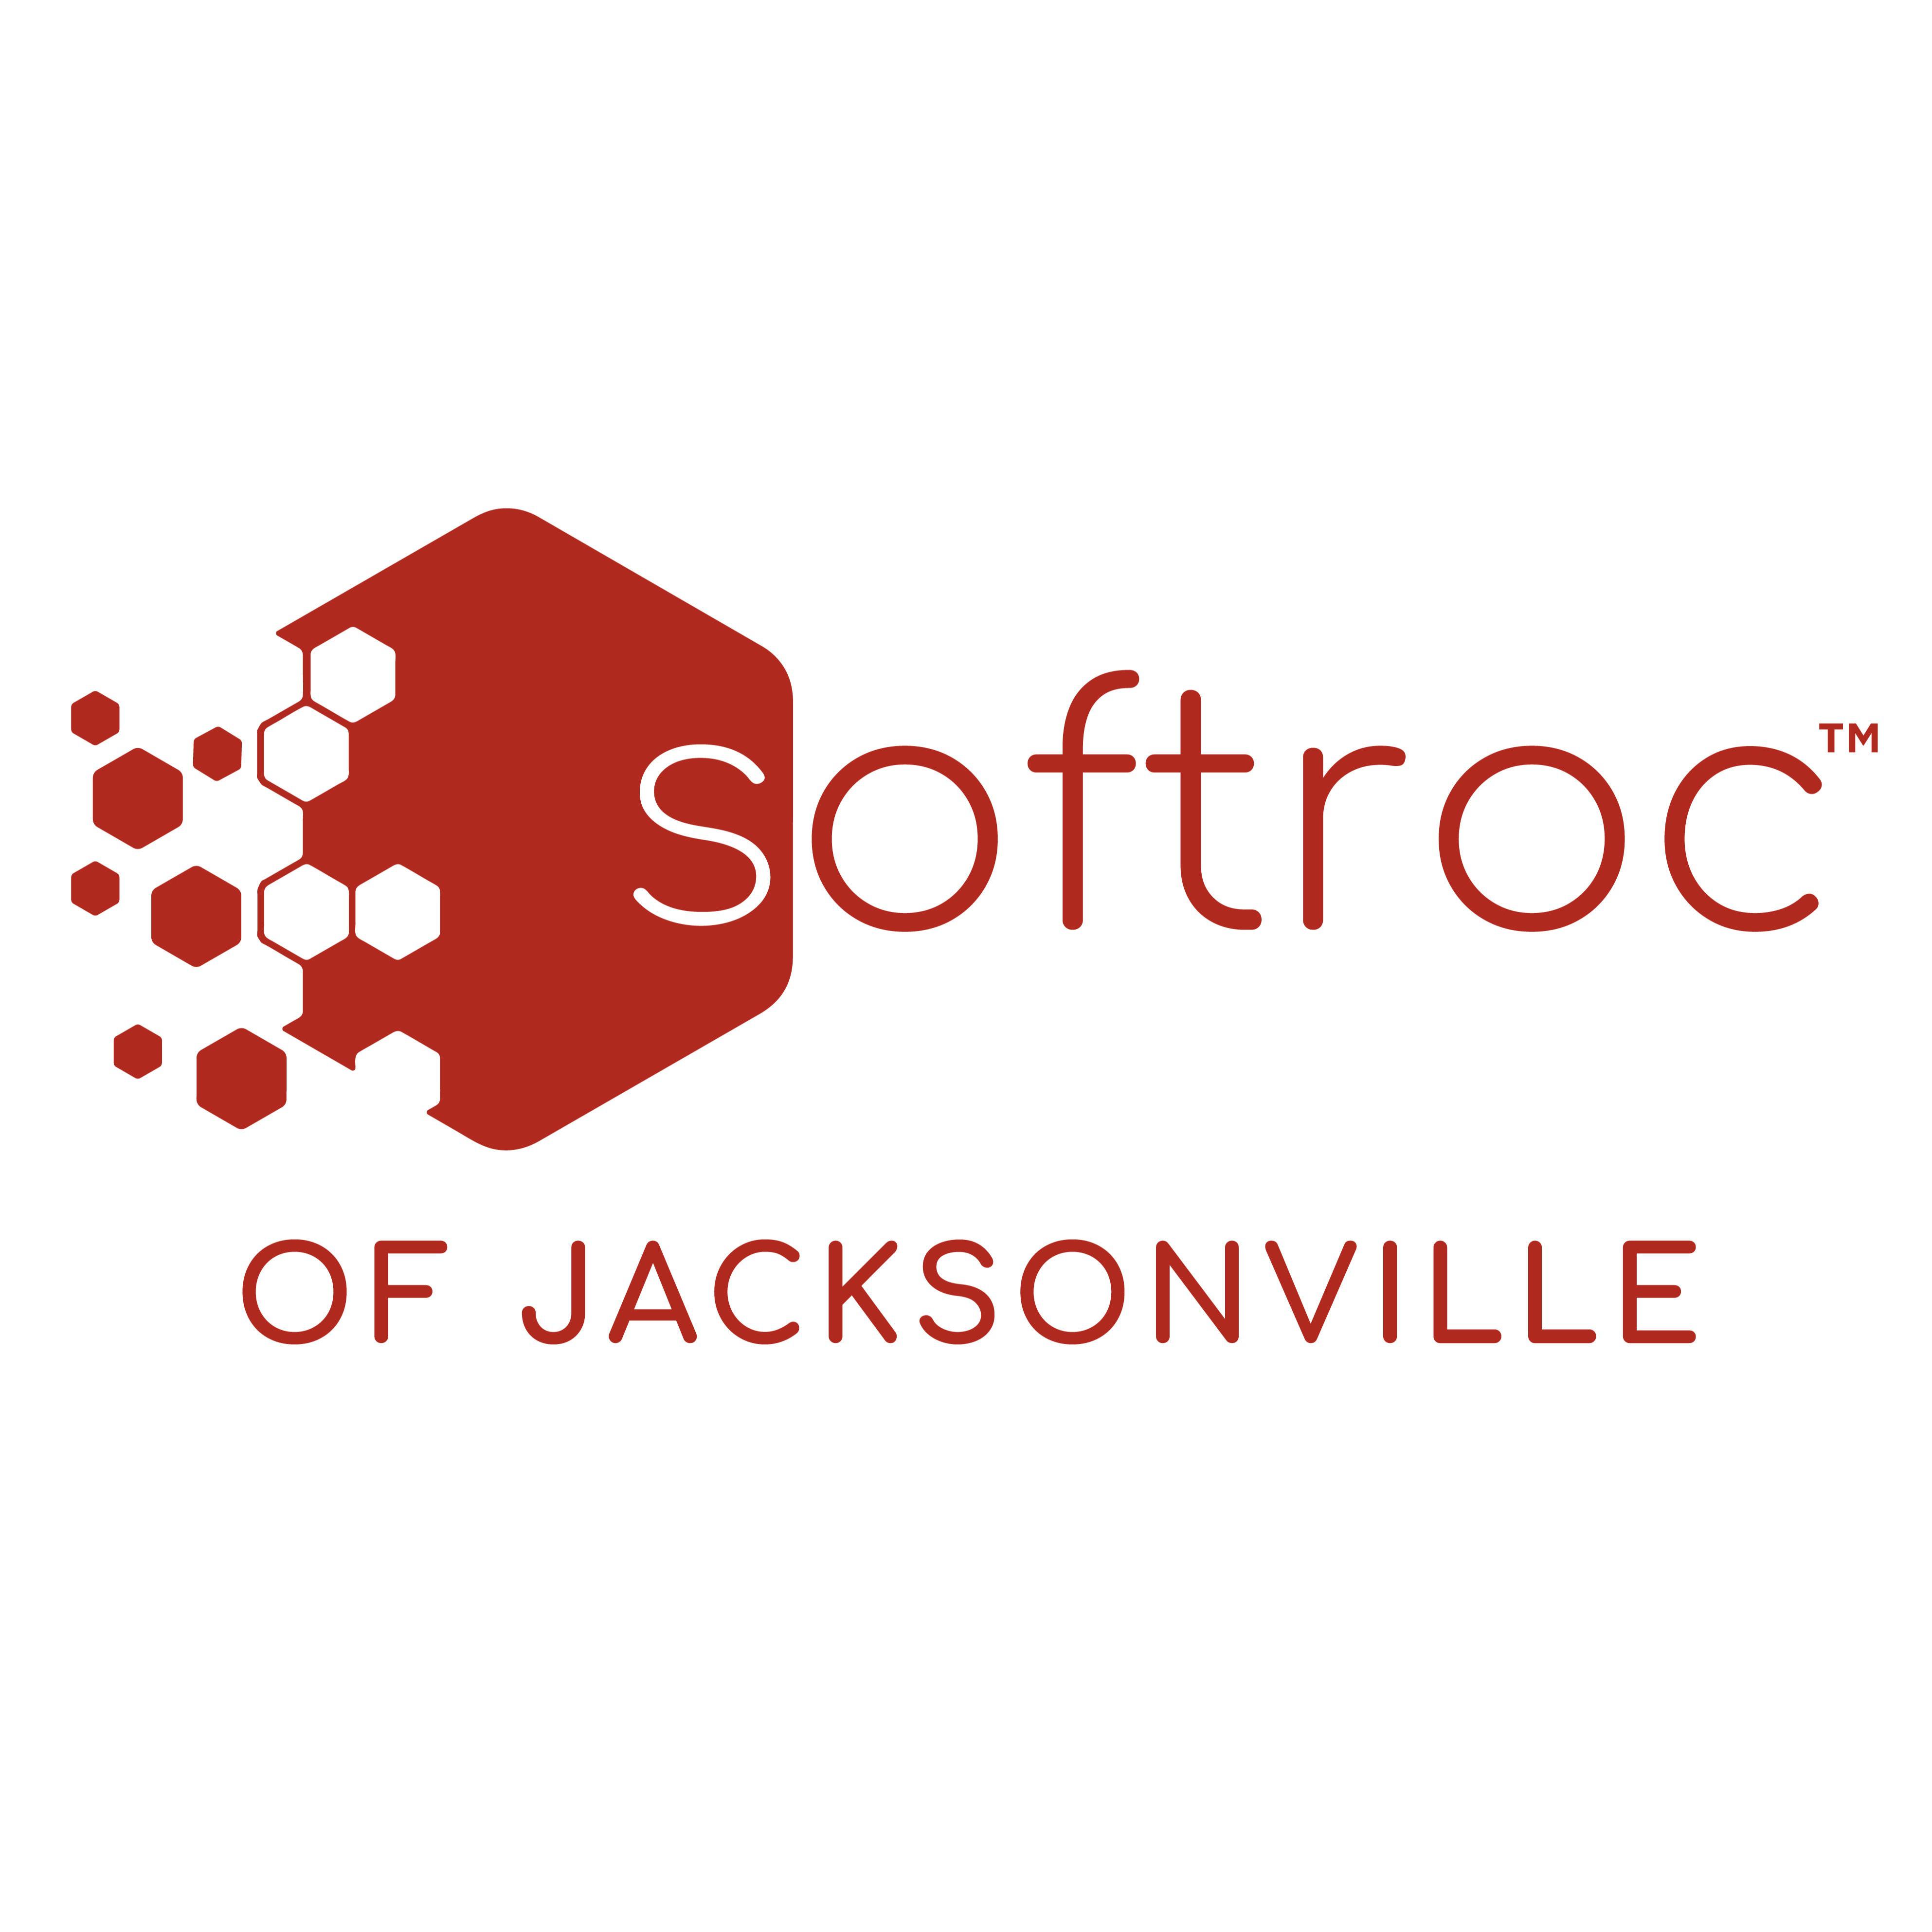 Softroc of Jacksonville